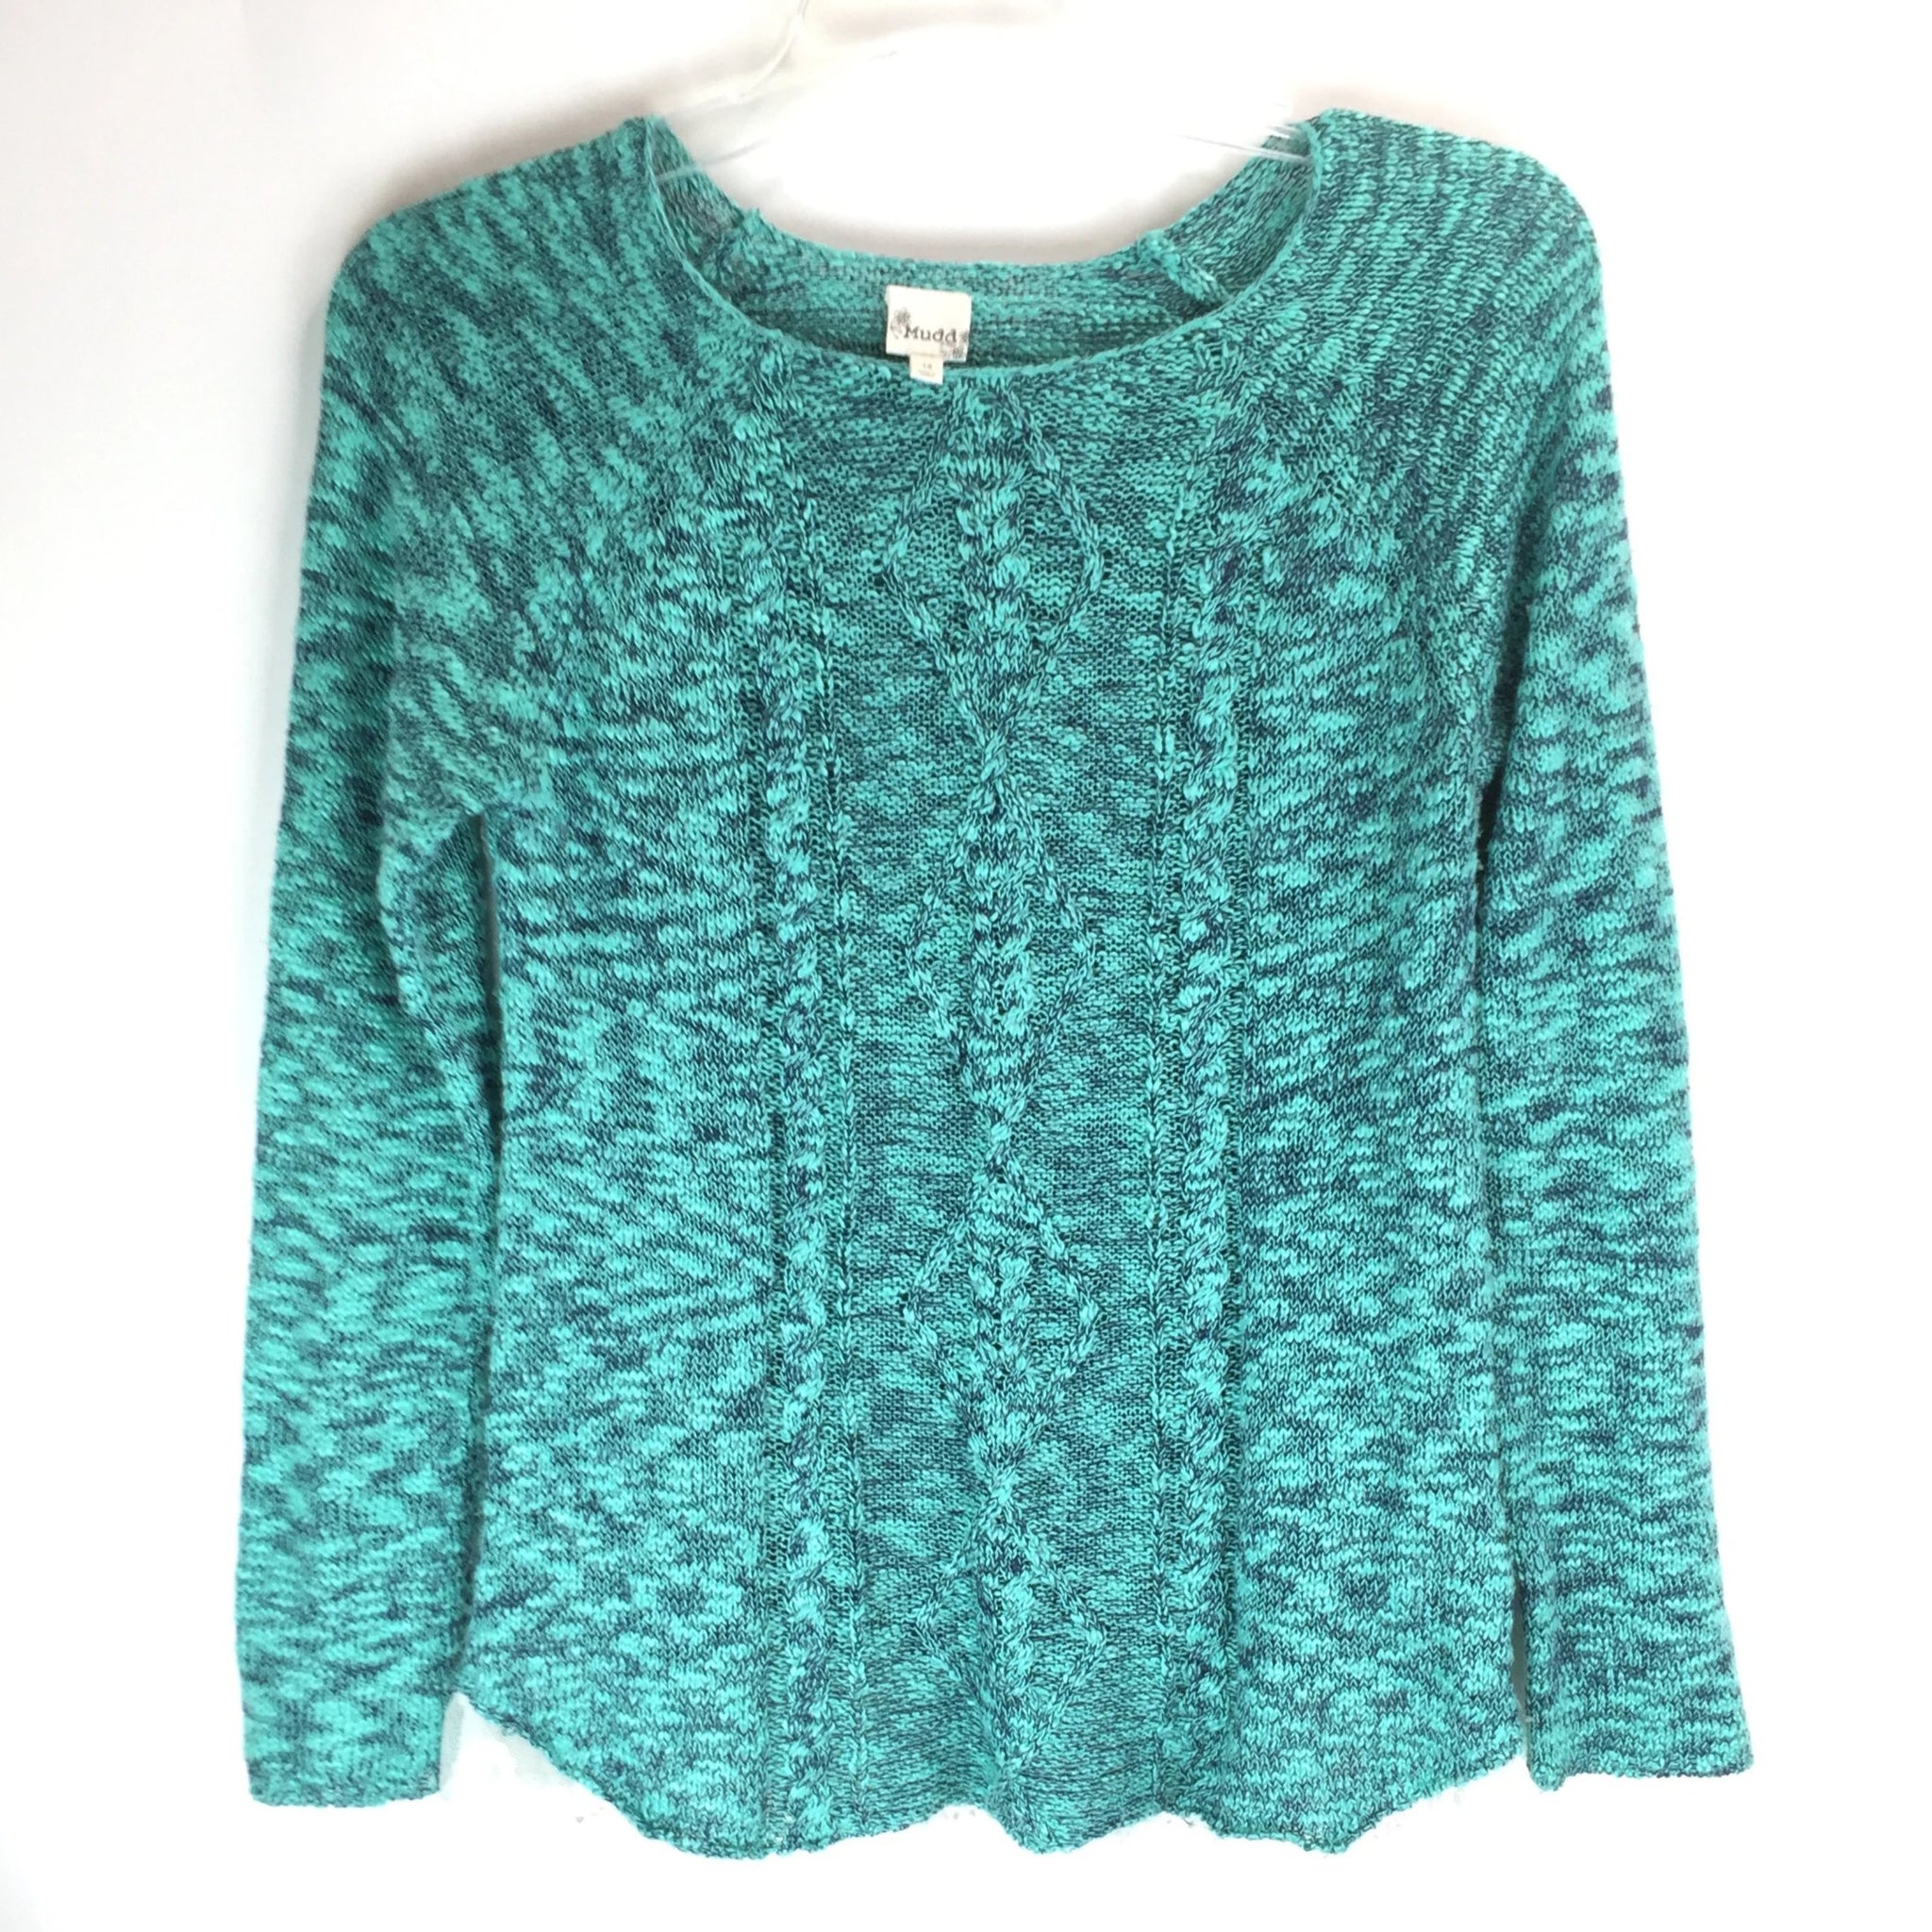 Mudd Girls Sweater - Lace Bottom - Size 14 - Turquoise and Black